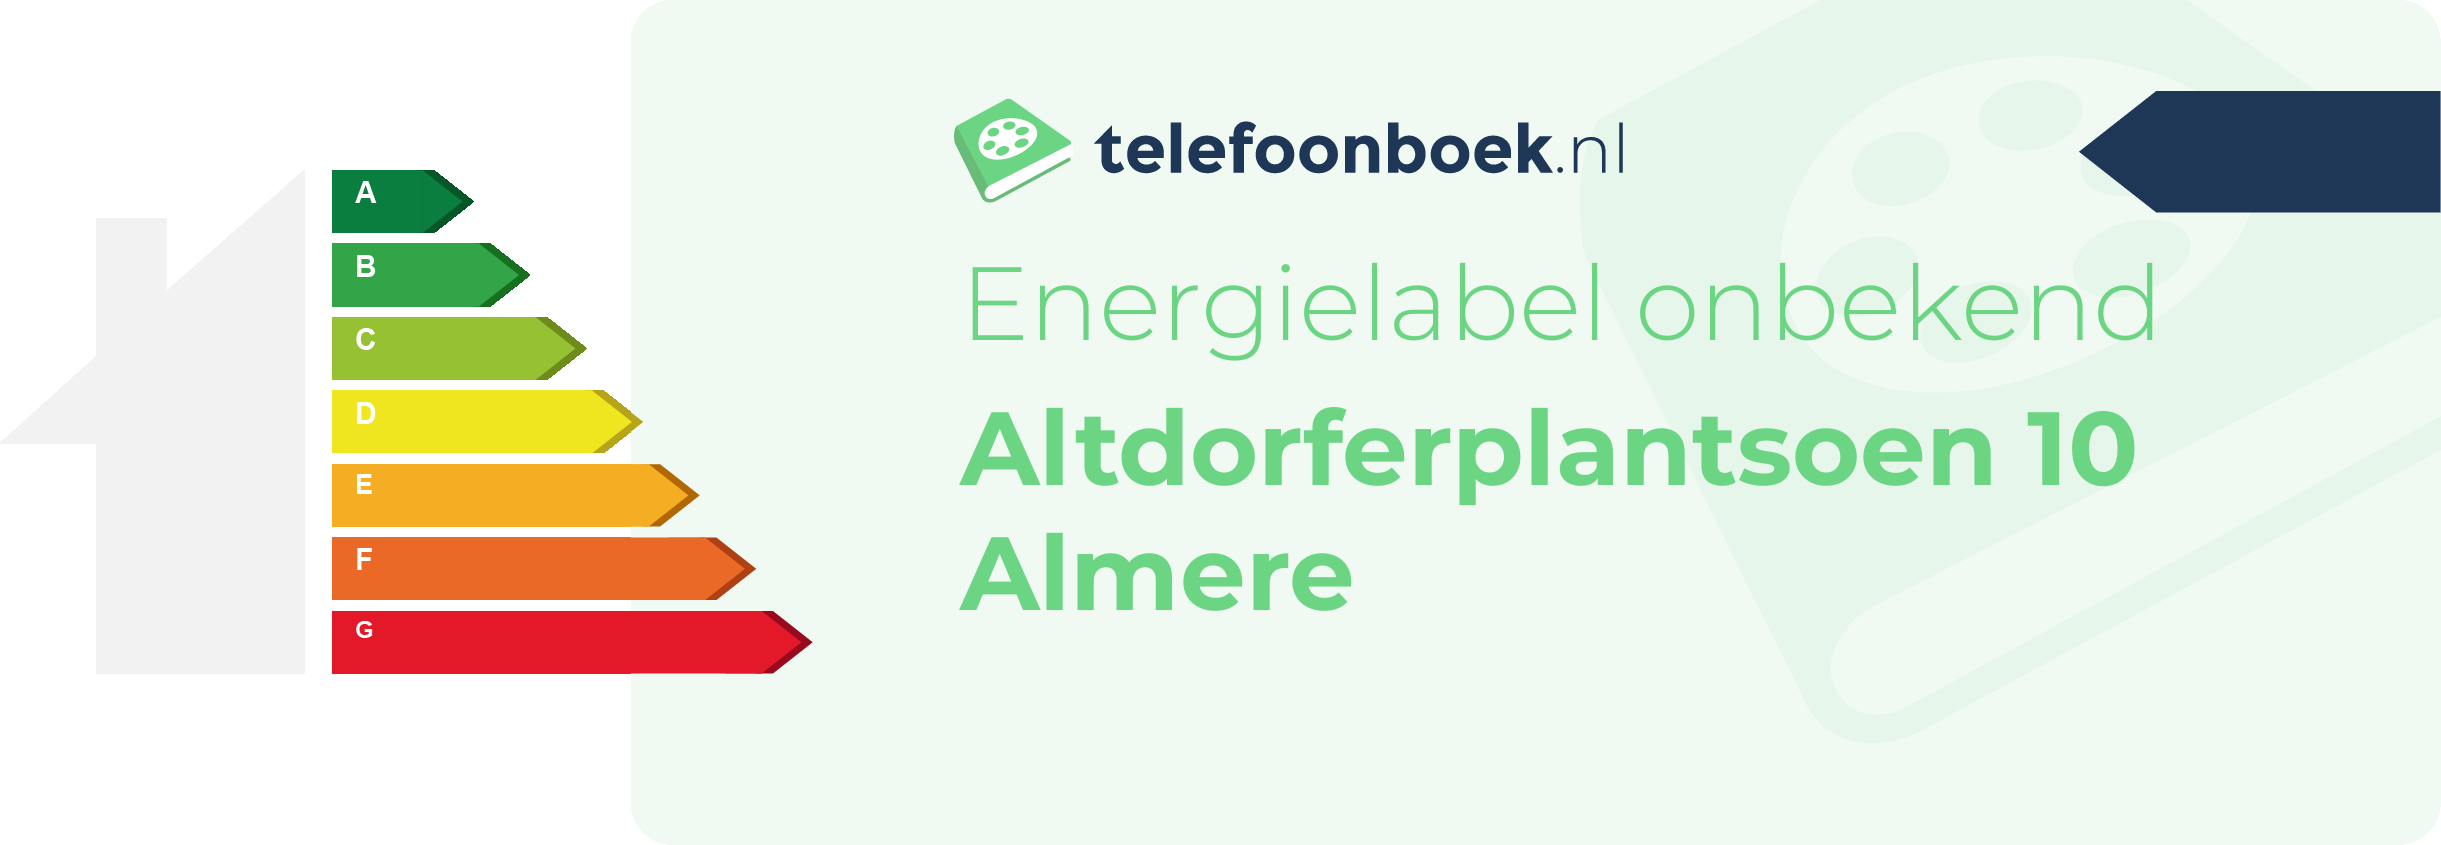 Energielabel Altdorferplantsoen 10 Almere